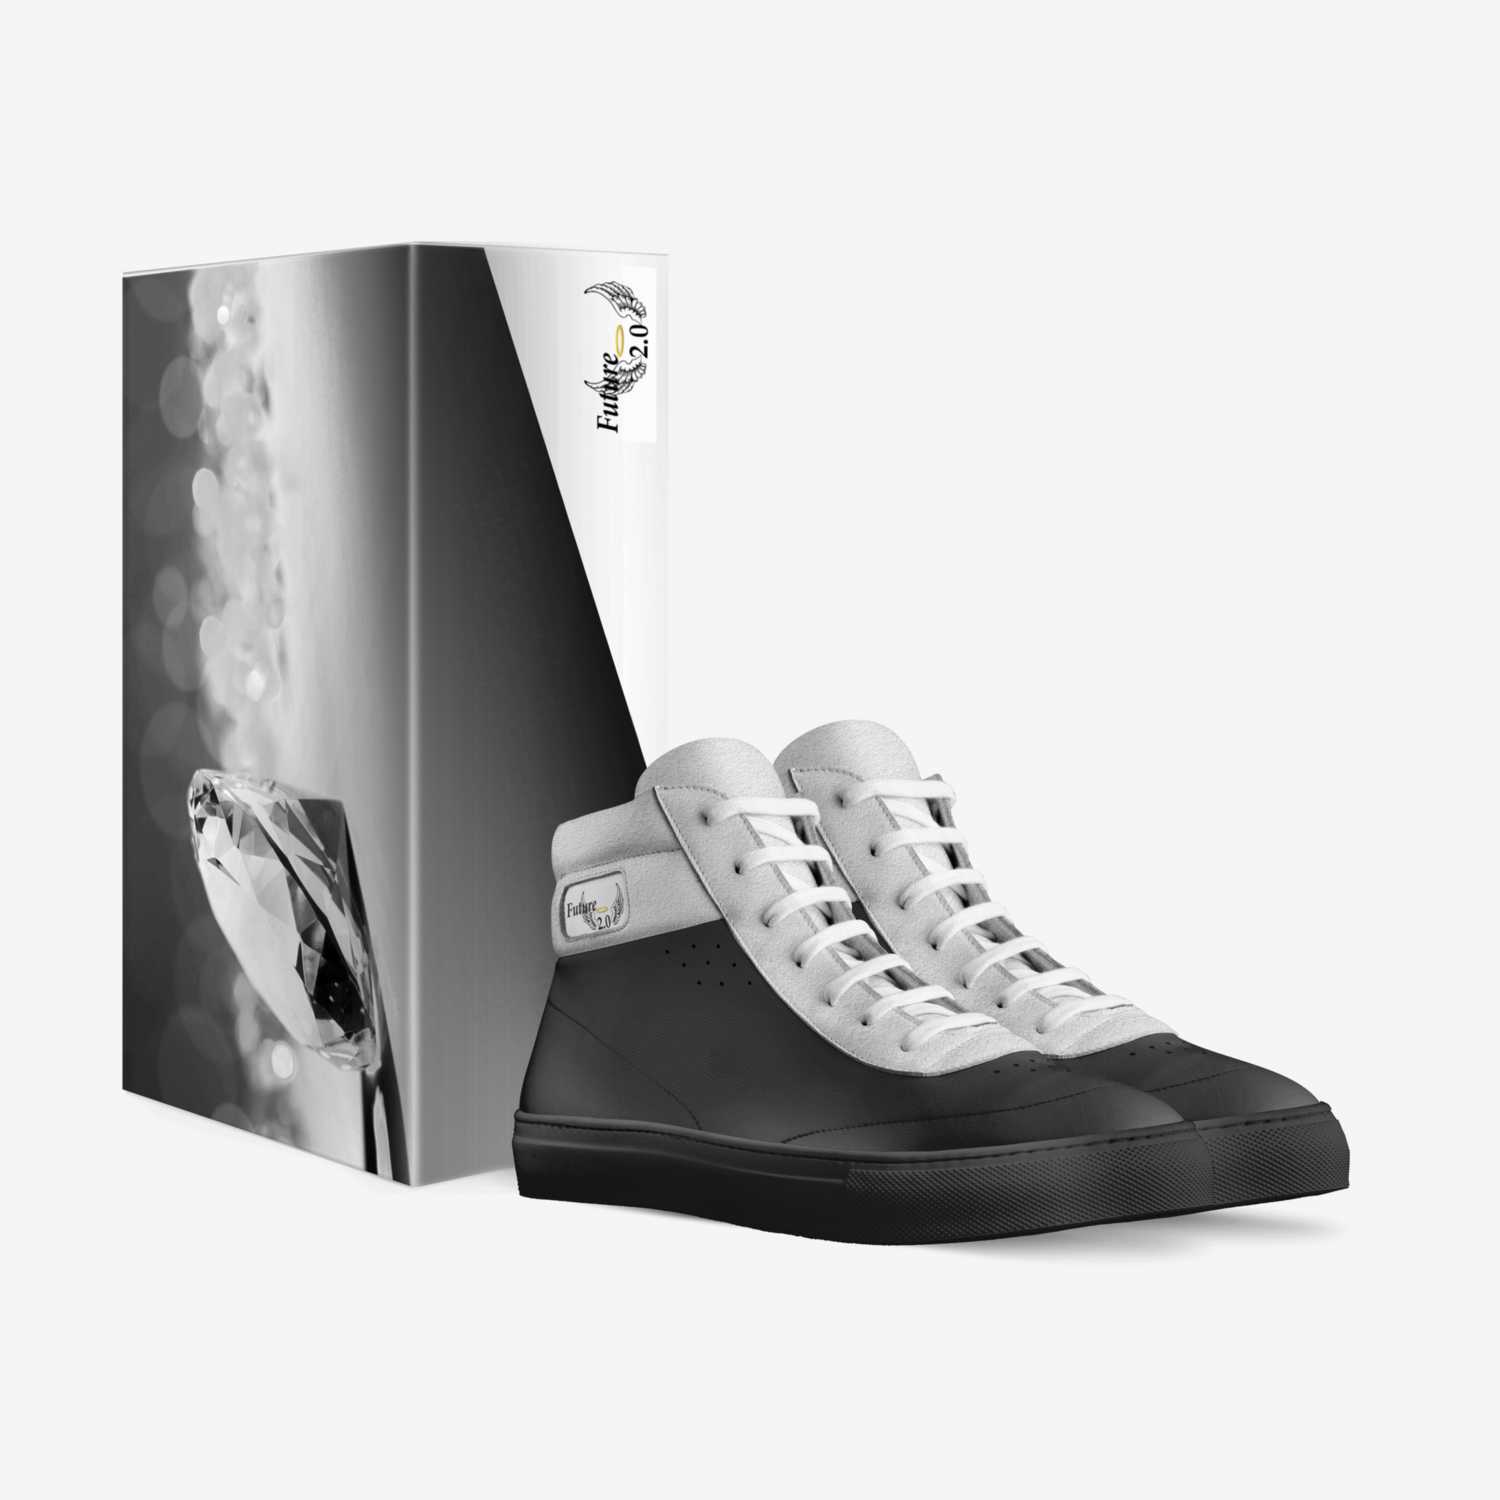 Future 2.0 custom made in Italy shoes by Sebastien Sezlik | Box view